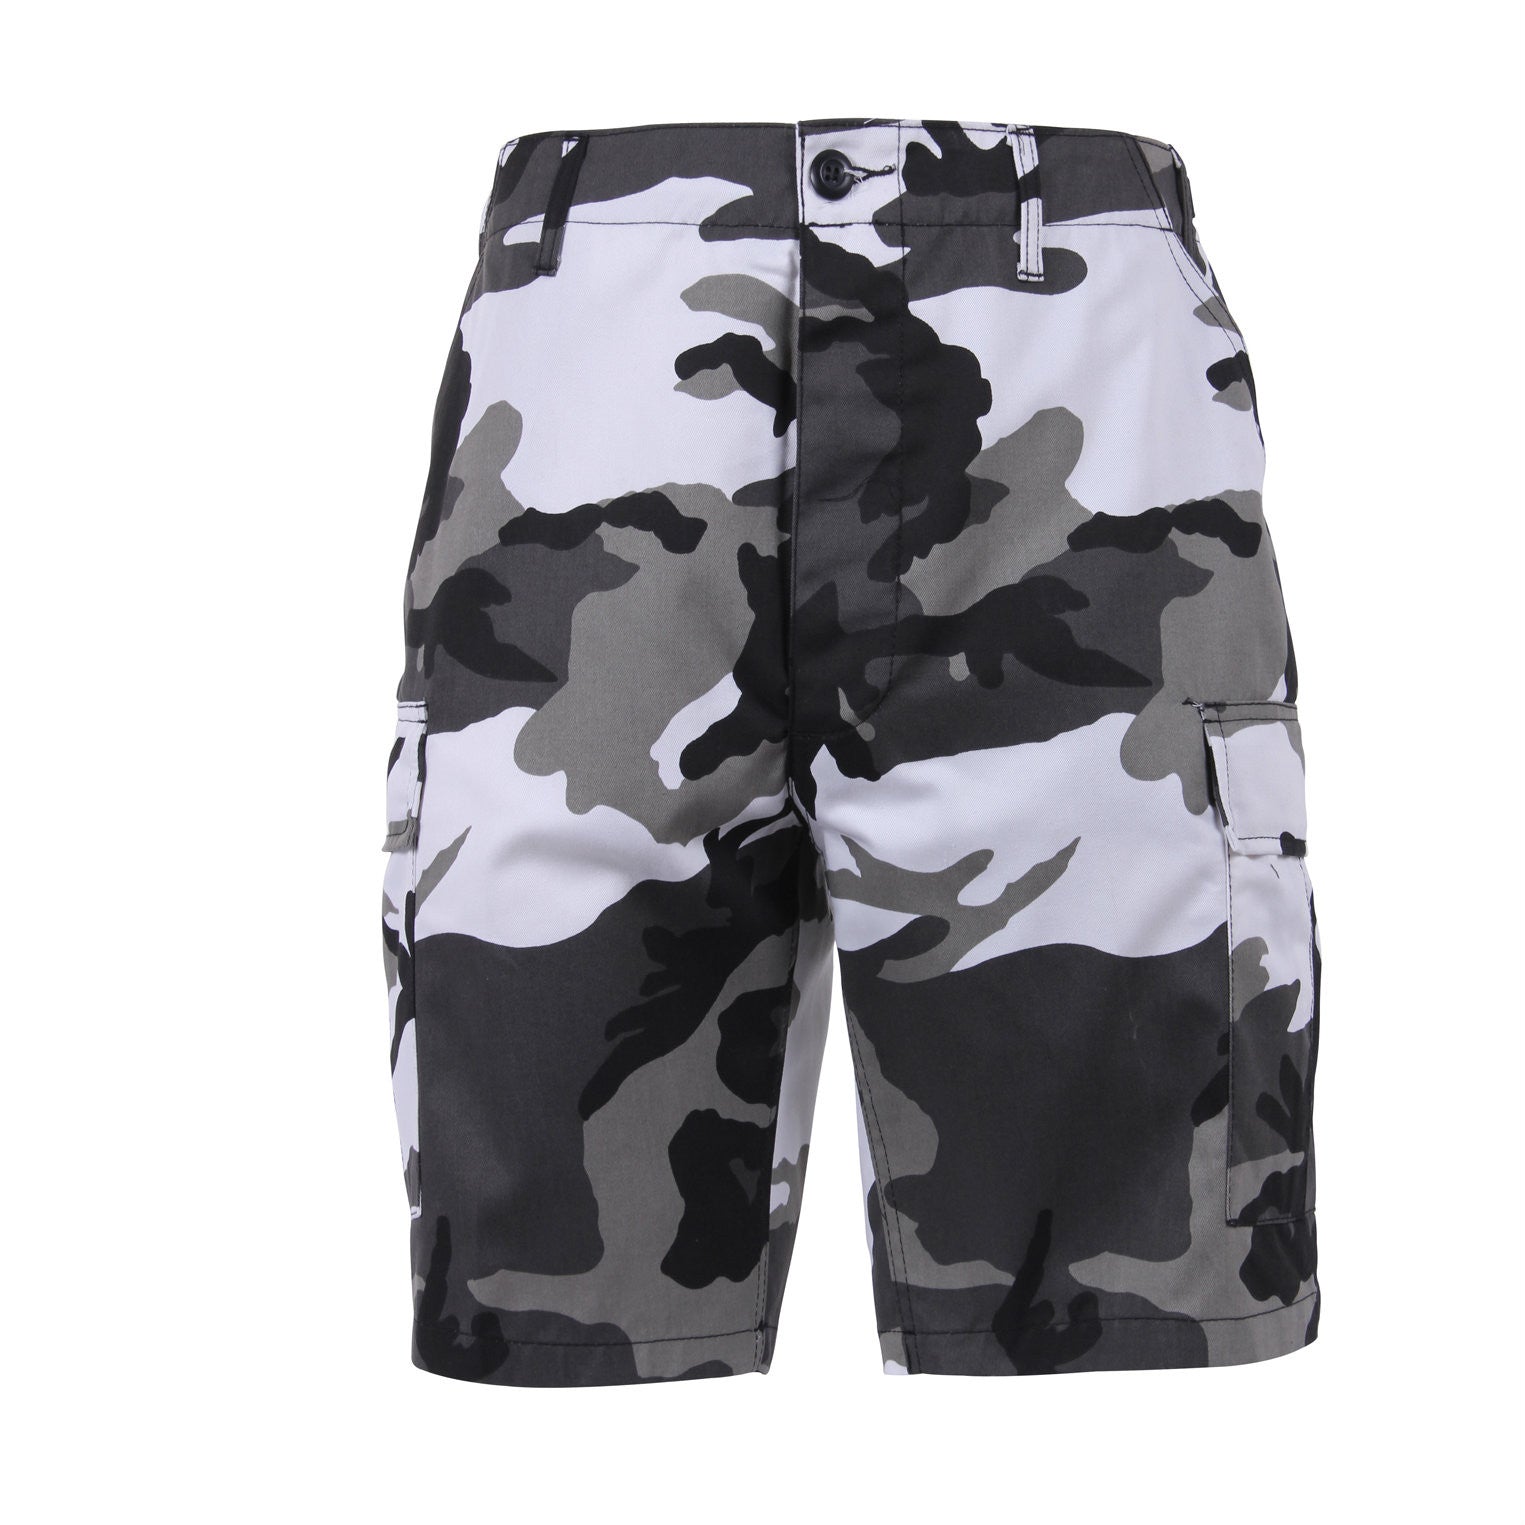 Urban City Camouflage BDU Shorts